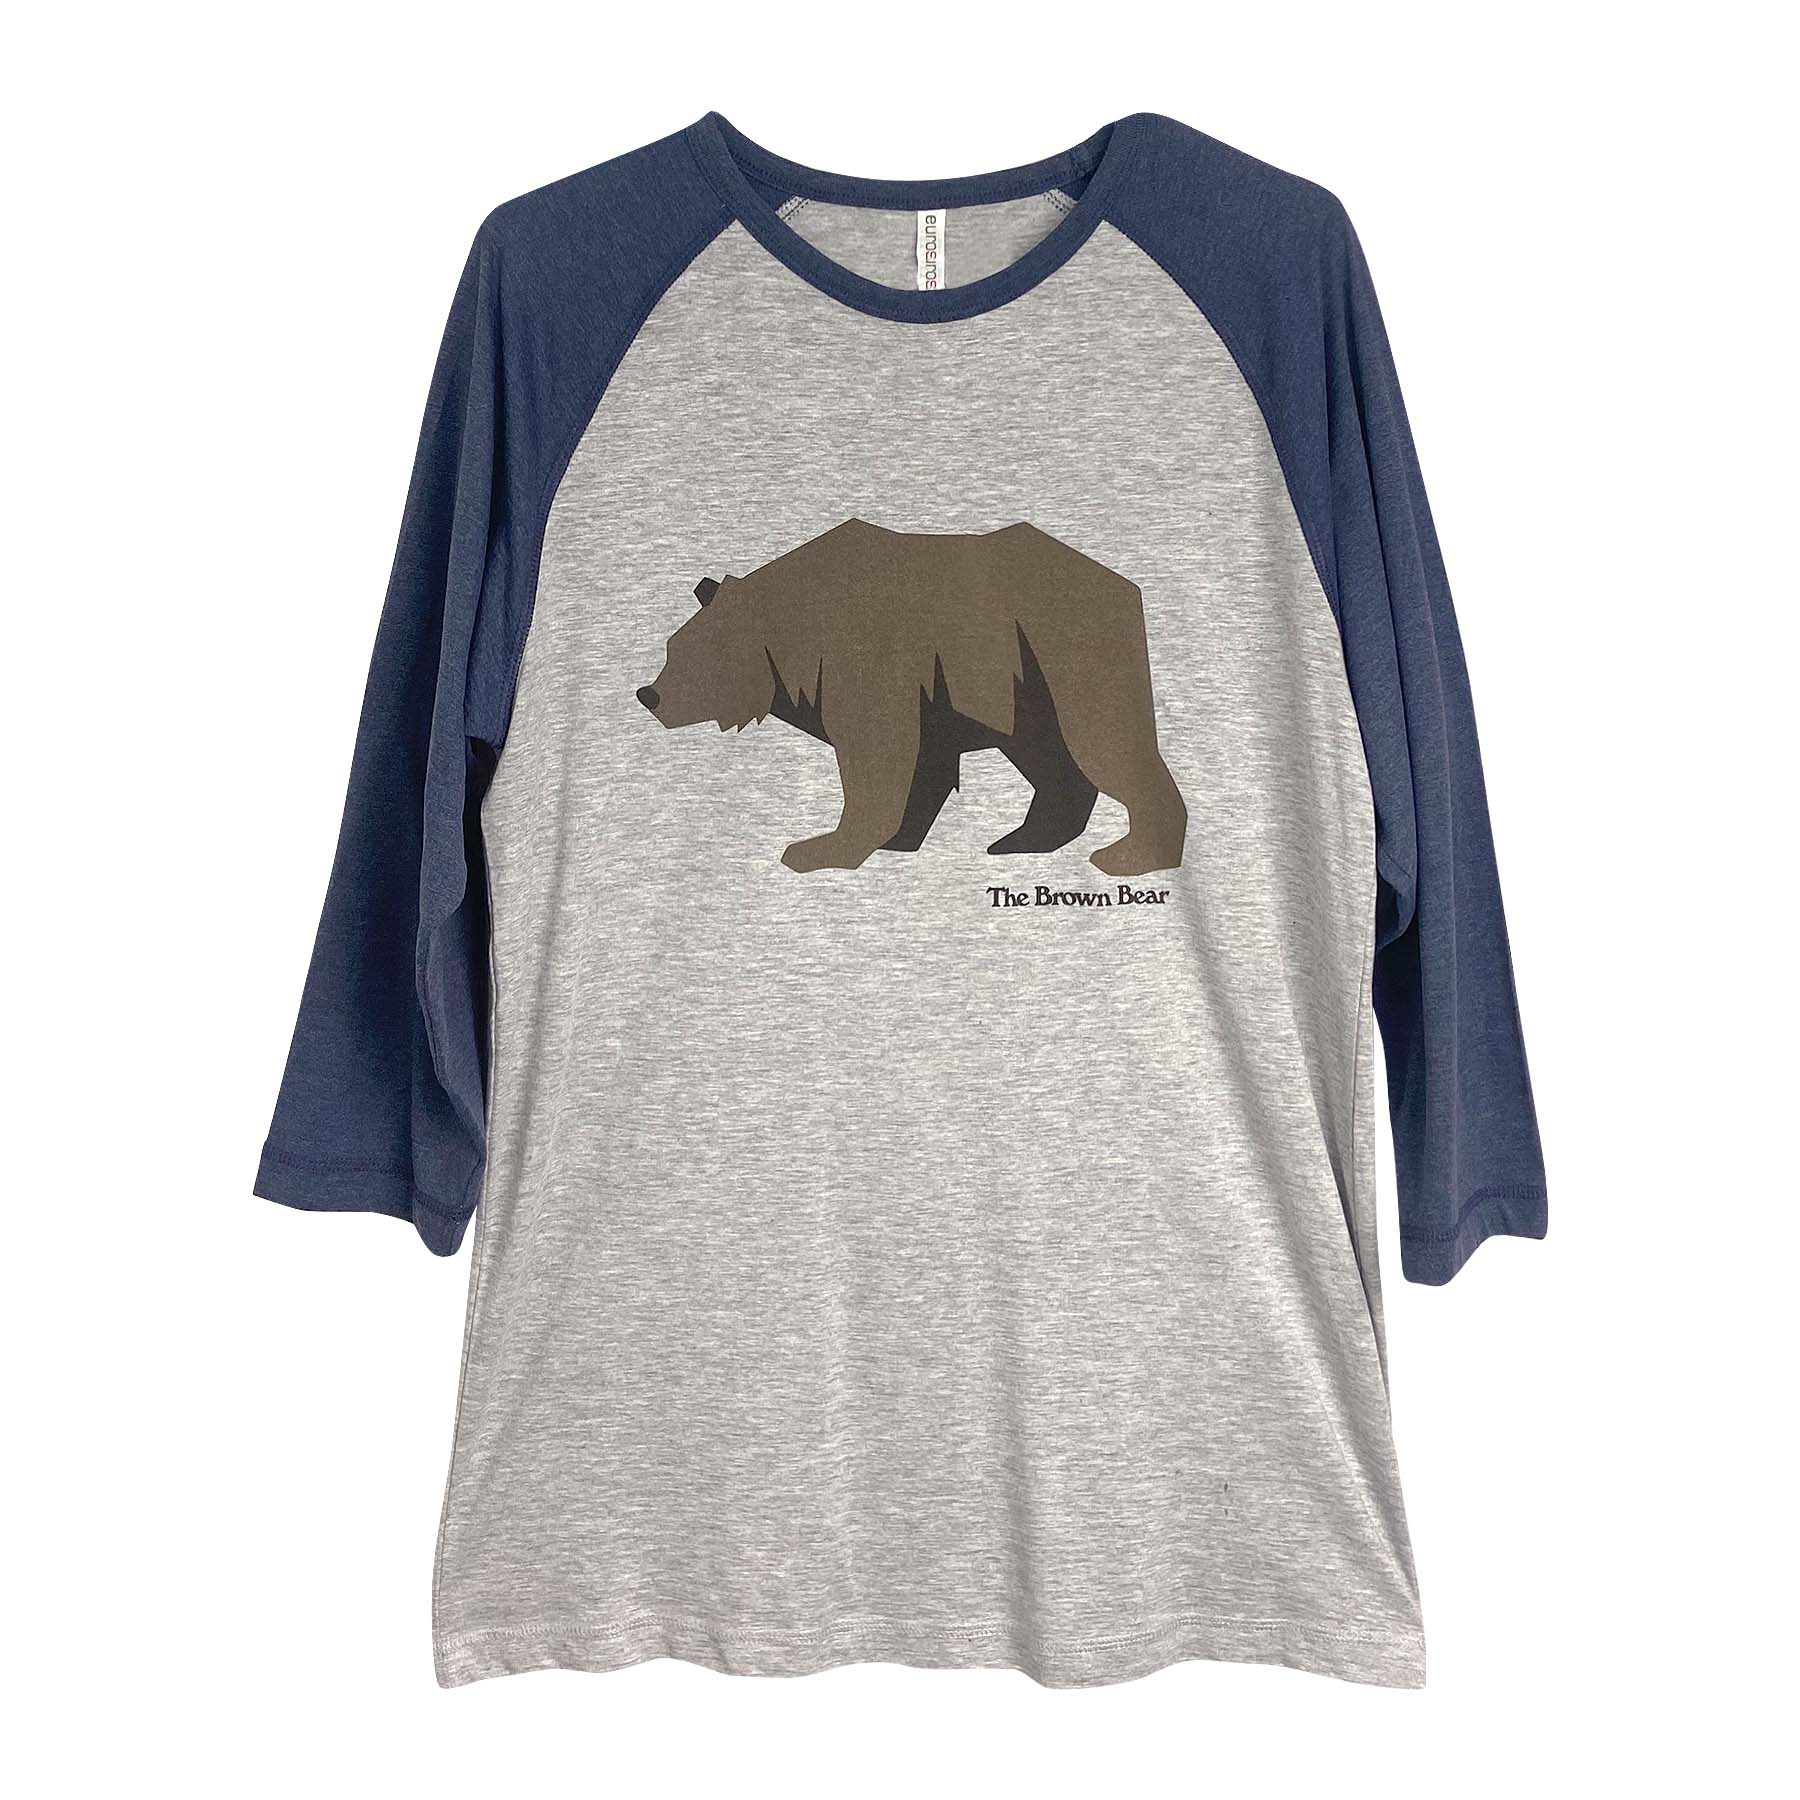 'The Brown Bear' 3/4 Length Raglan T-Shirt